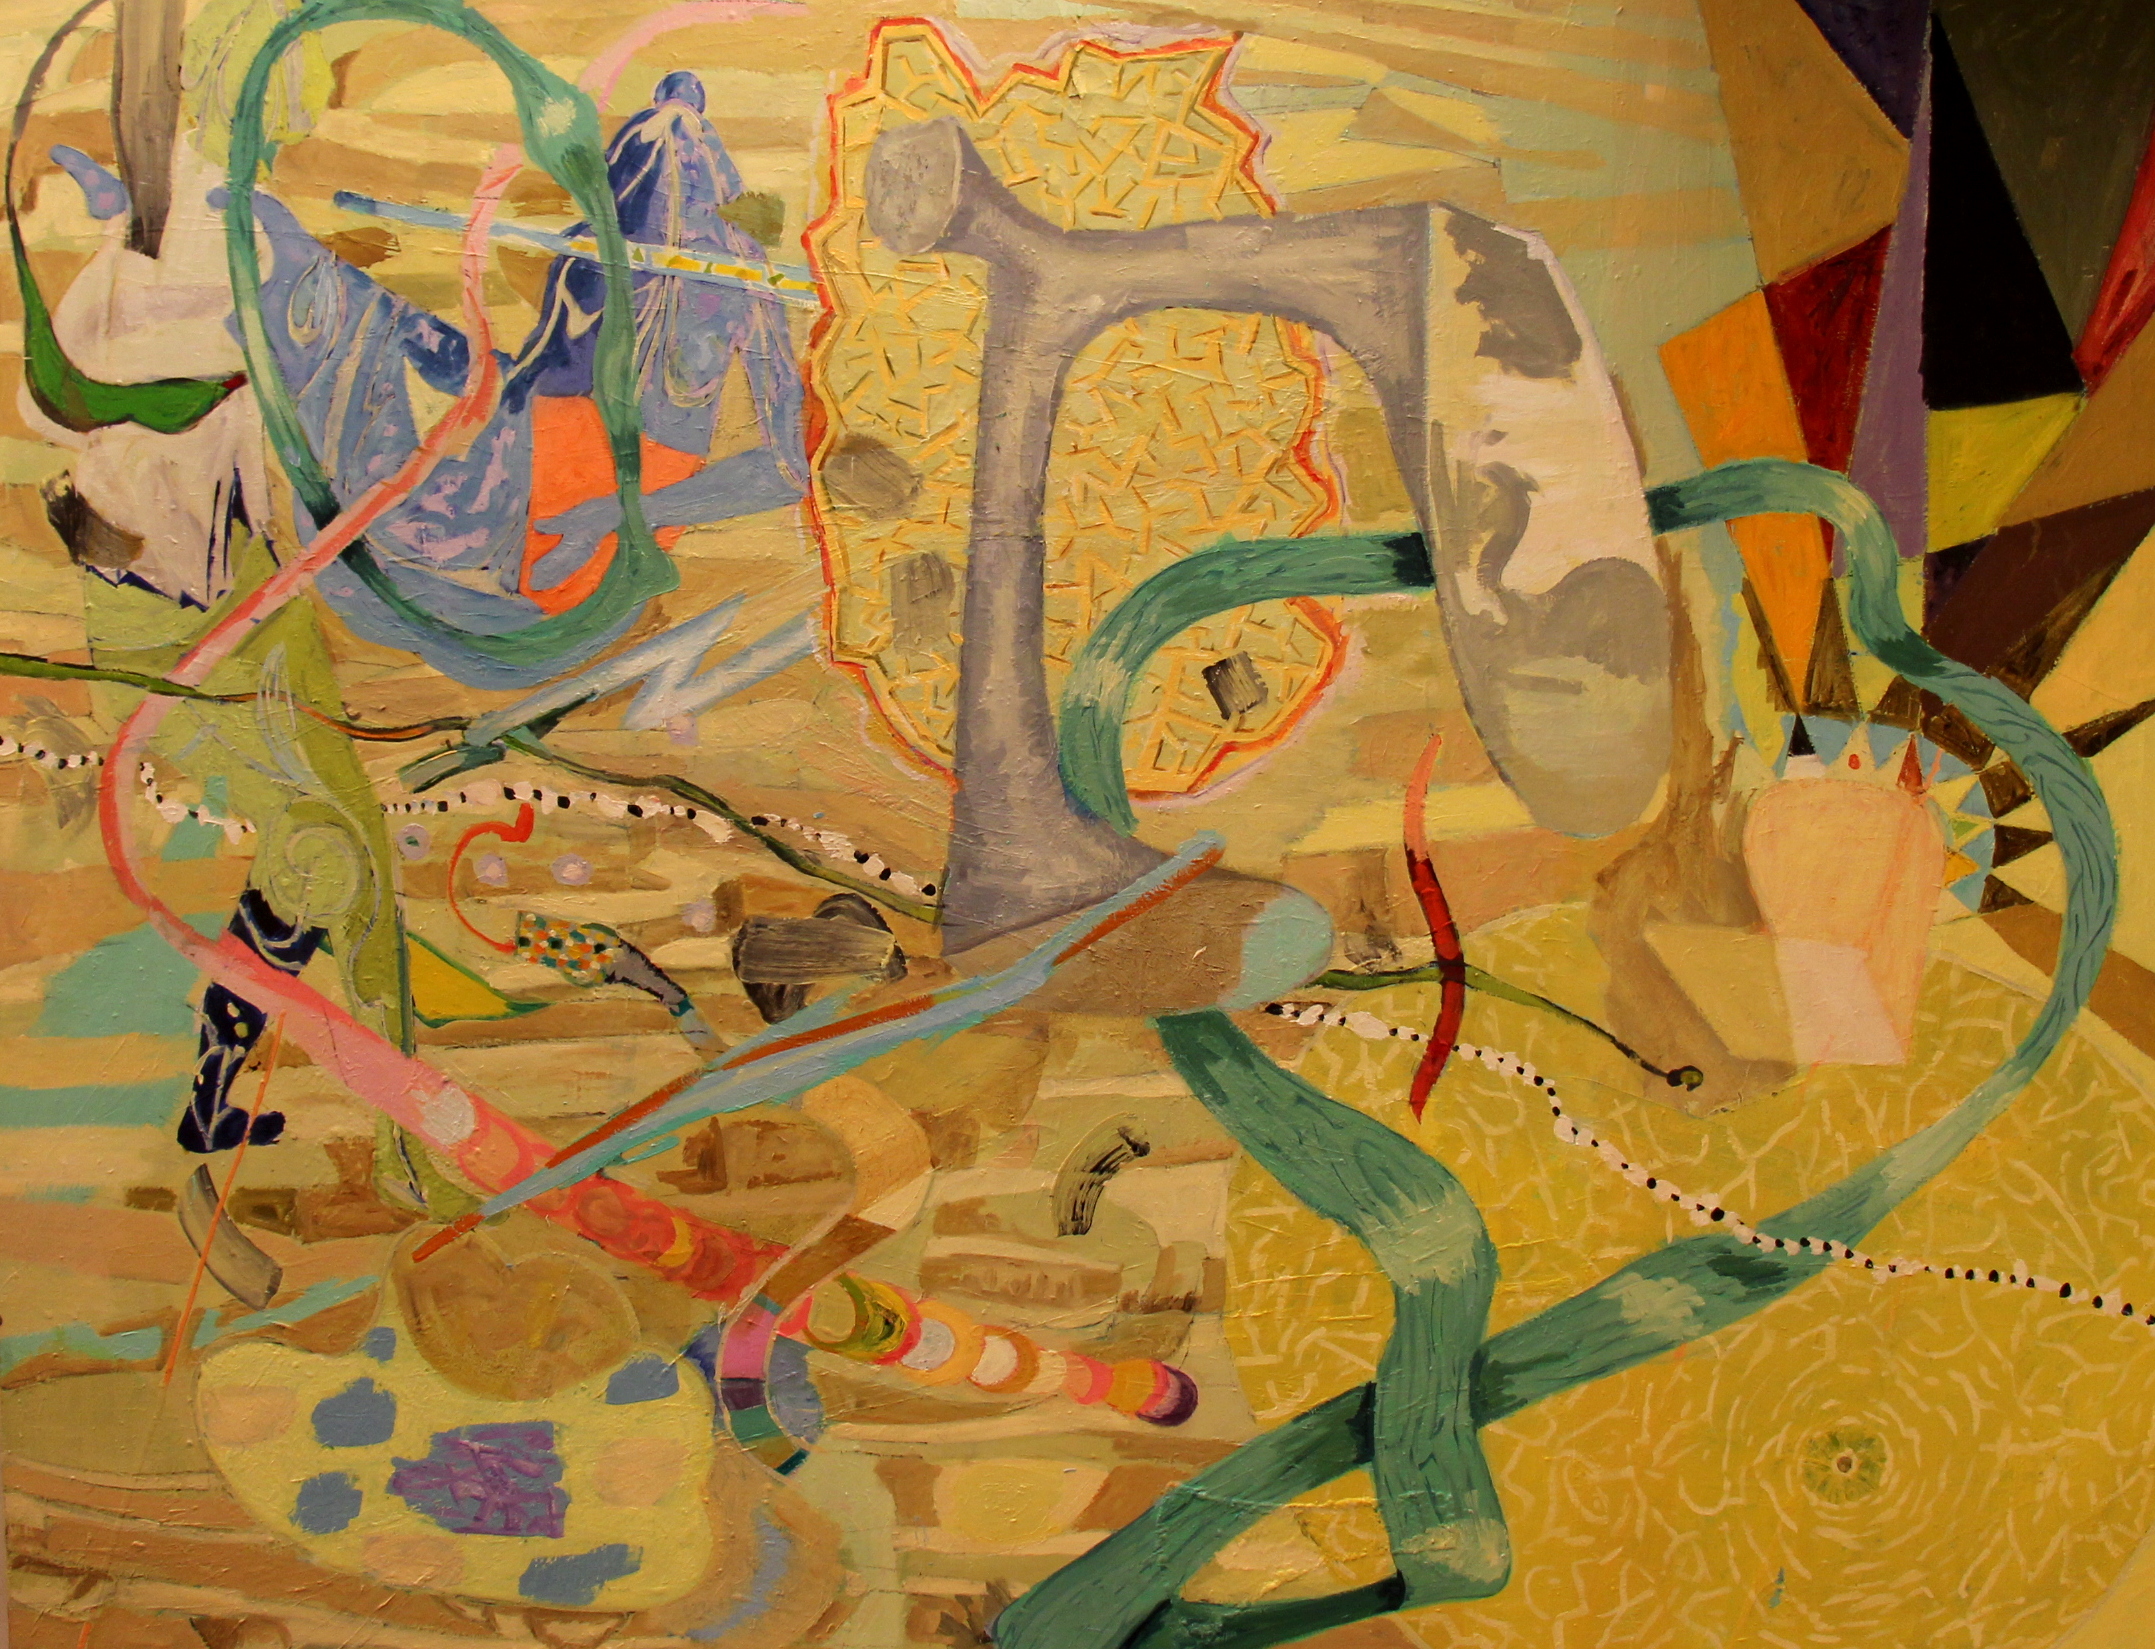 Balz Baechi, Amboss, 2009
Oil on canvas
160 x 210 cm